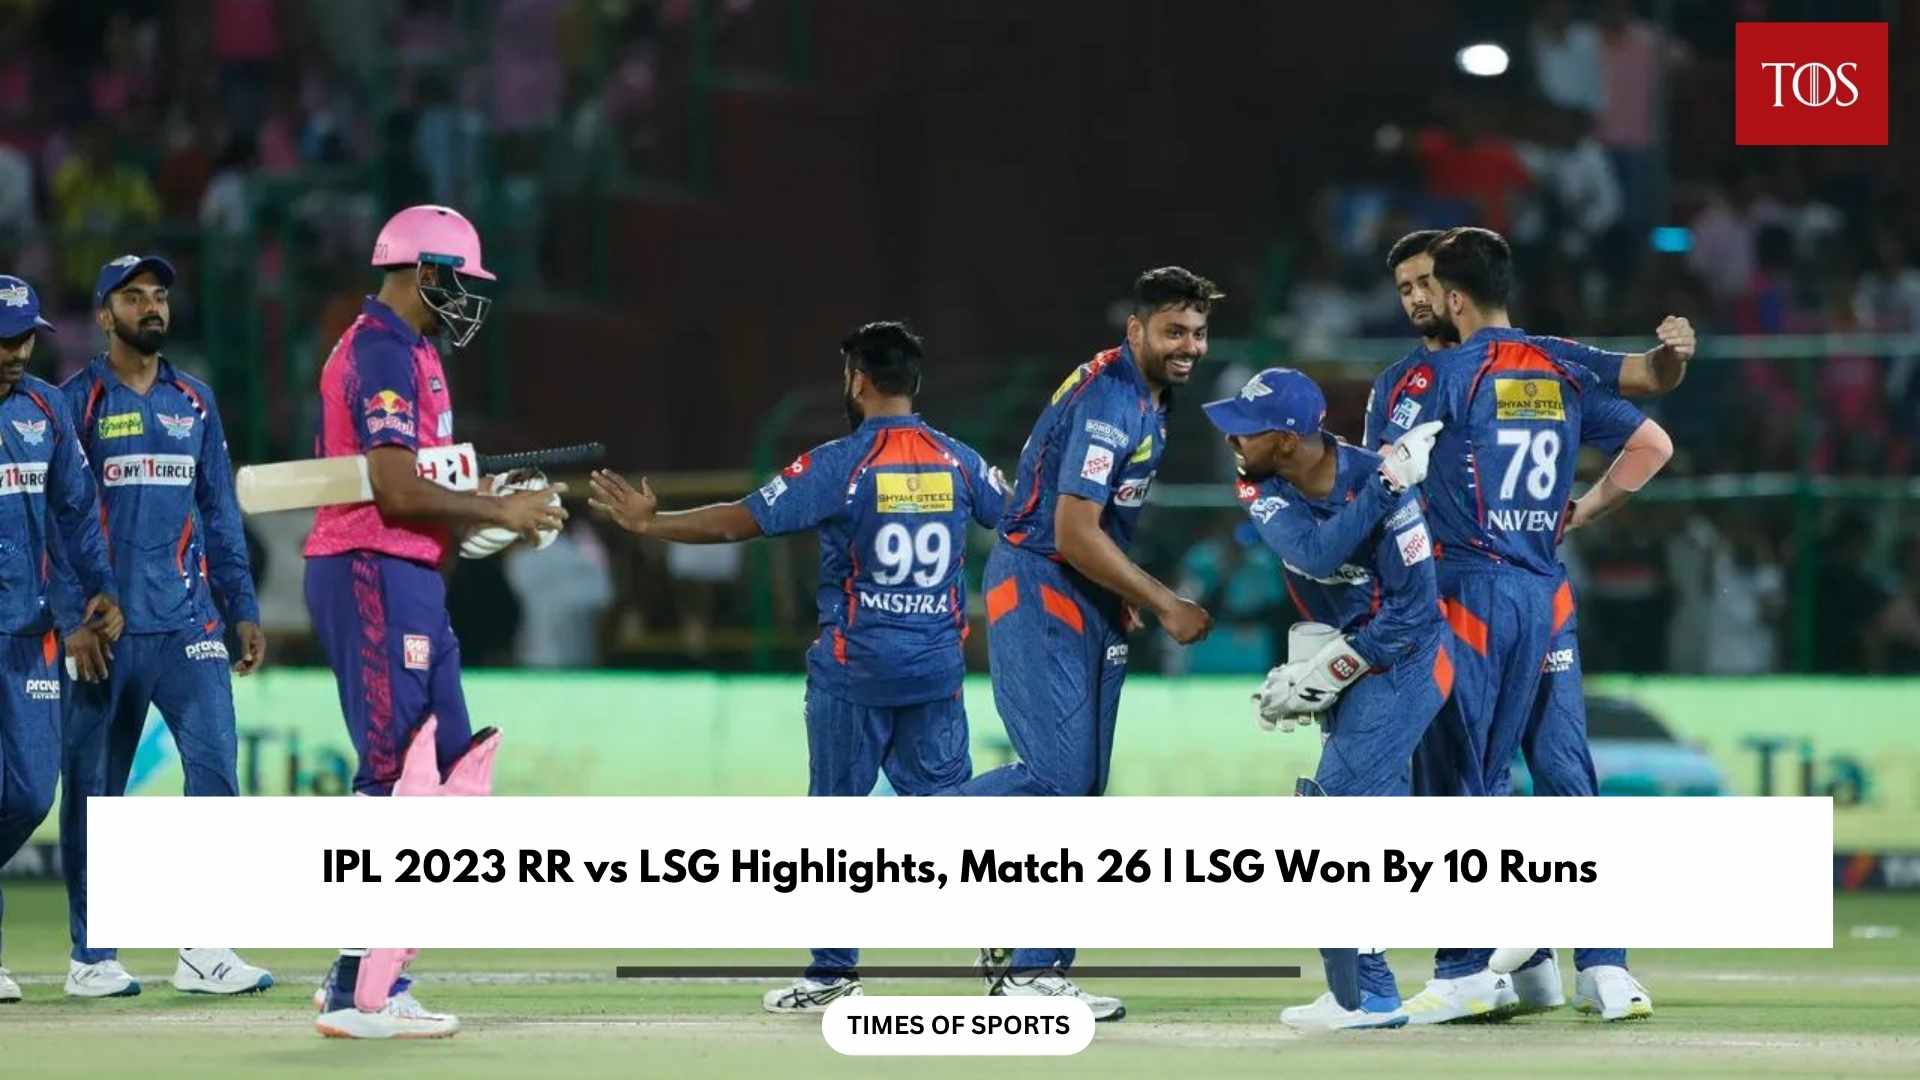 IPL 2023 RR vs LSG Highlights